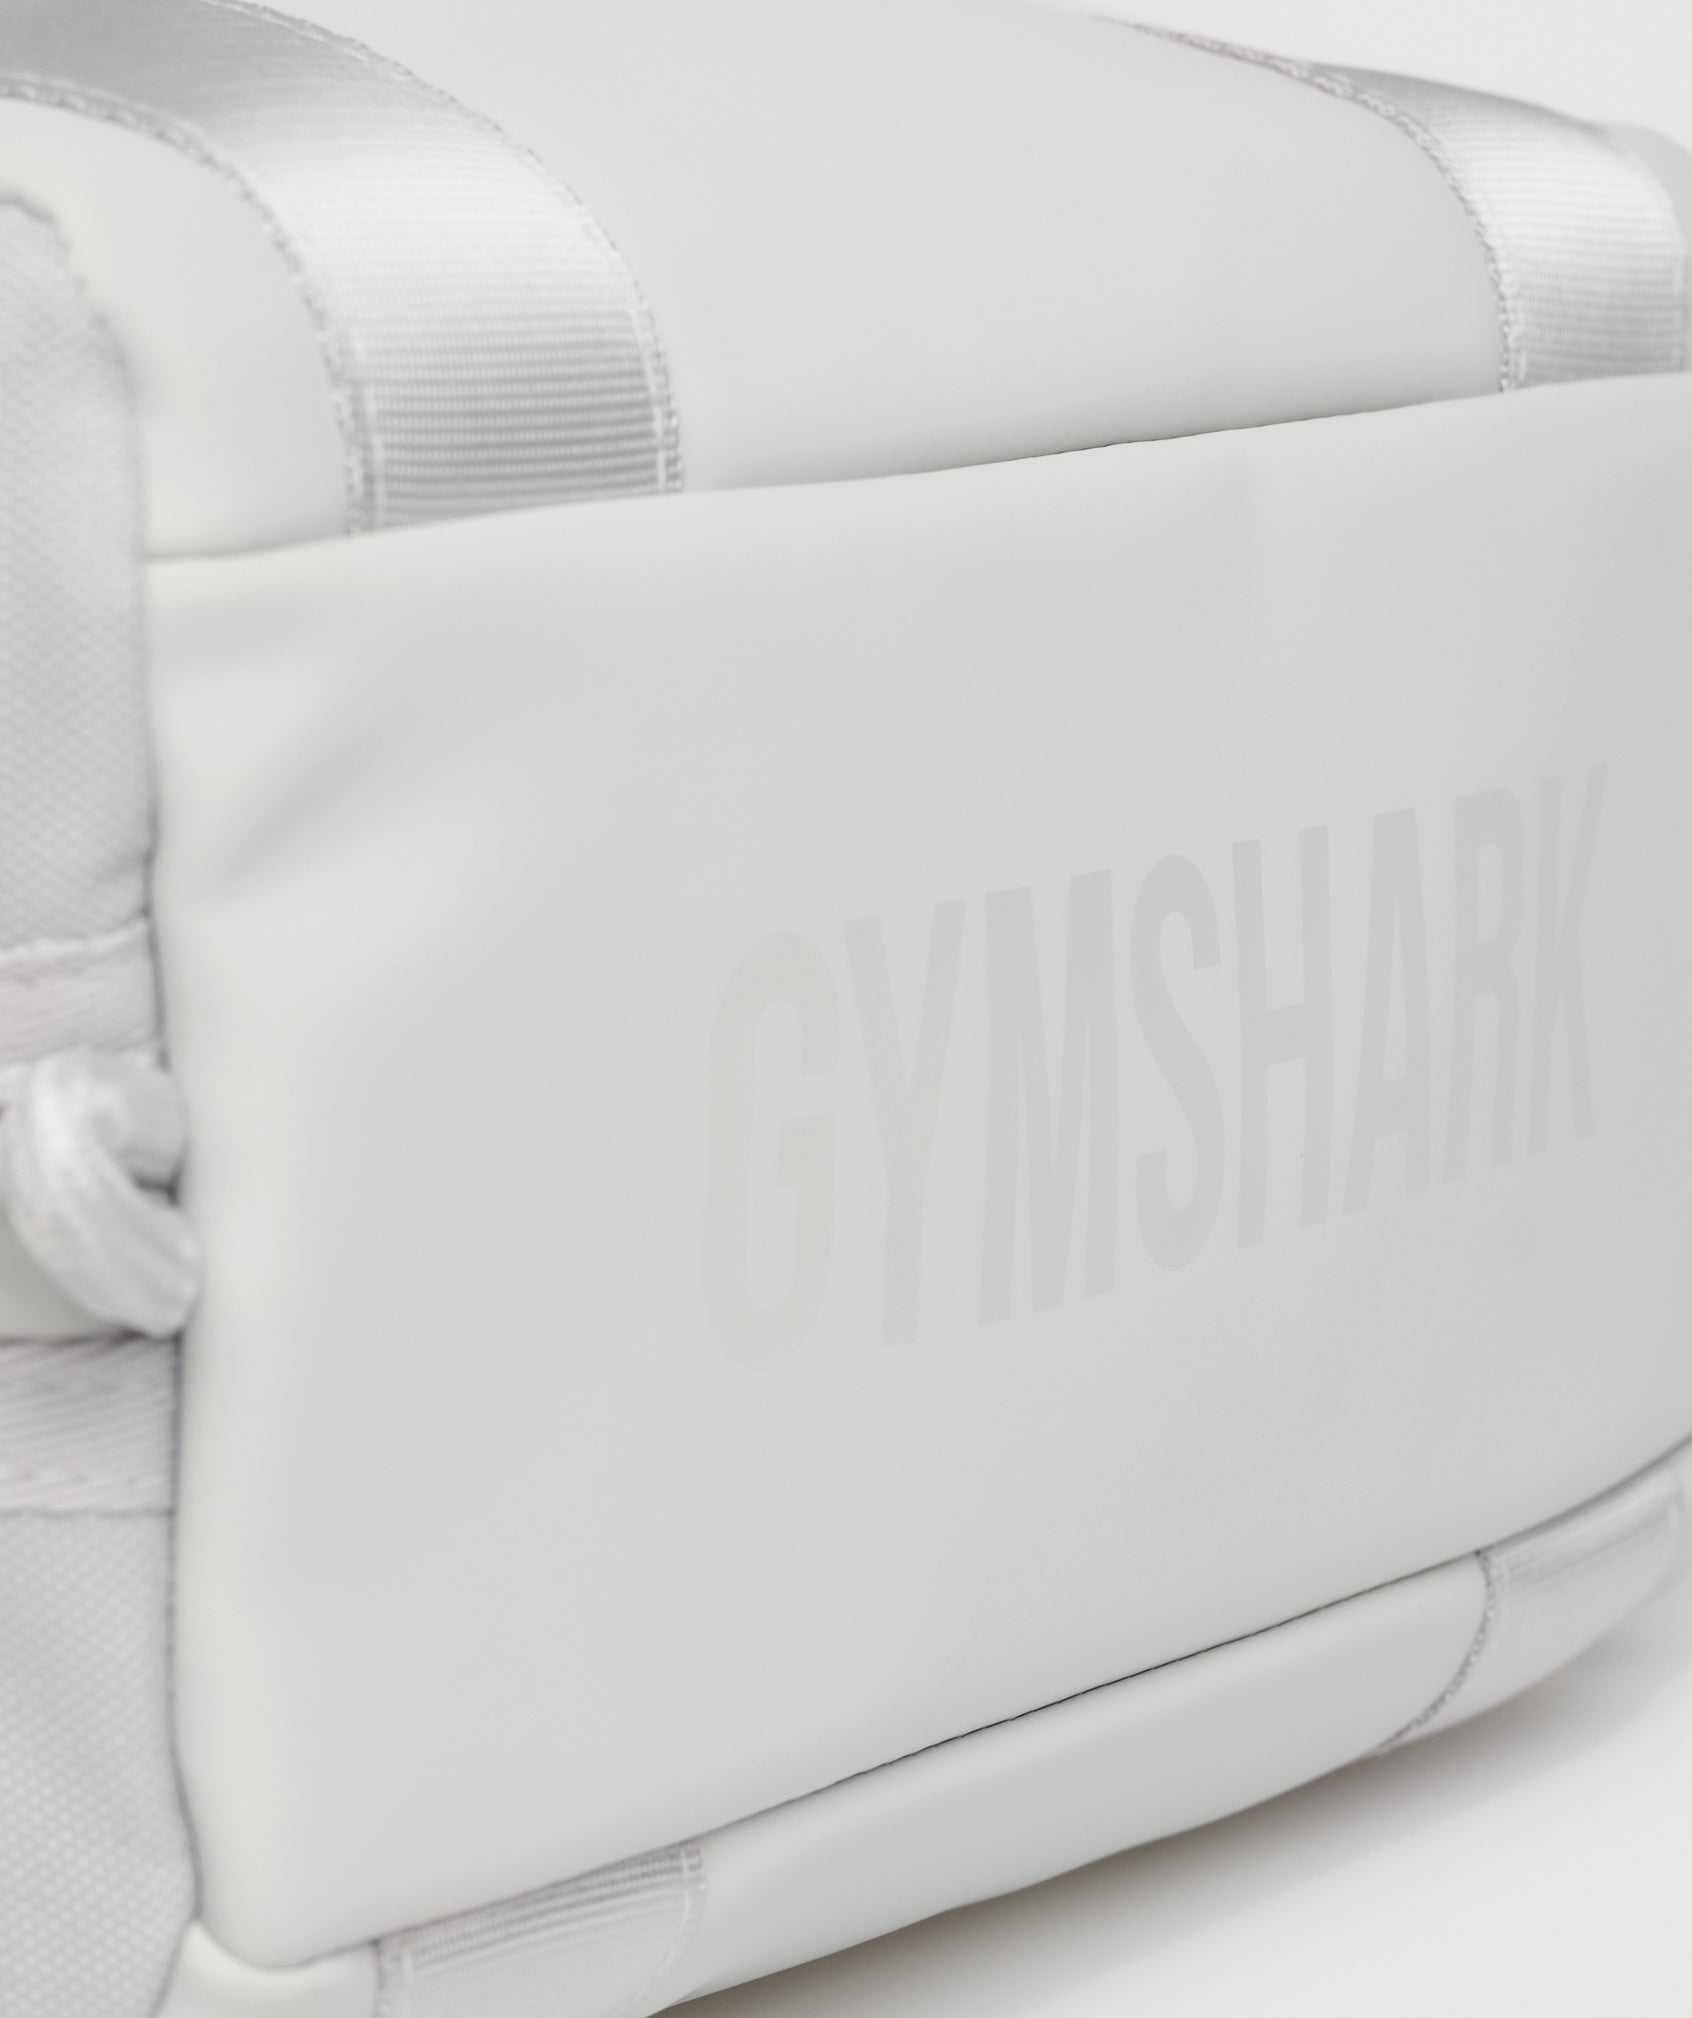 Gymshark Everyday Mini Backpack - Raspberry Pink